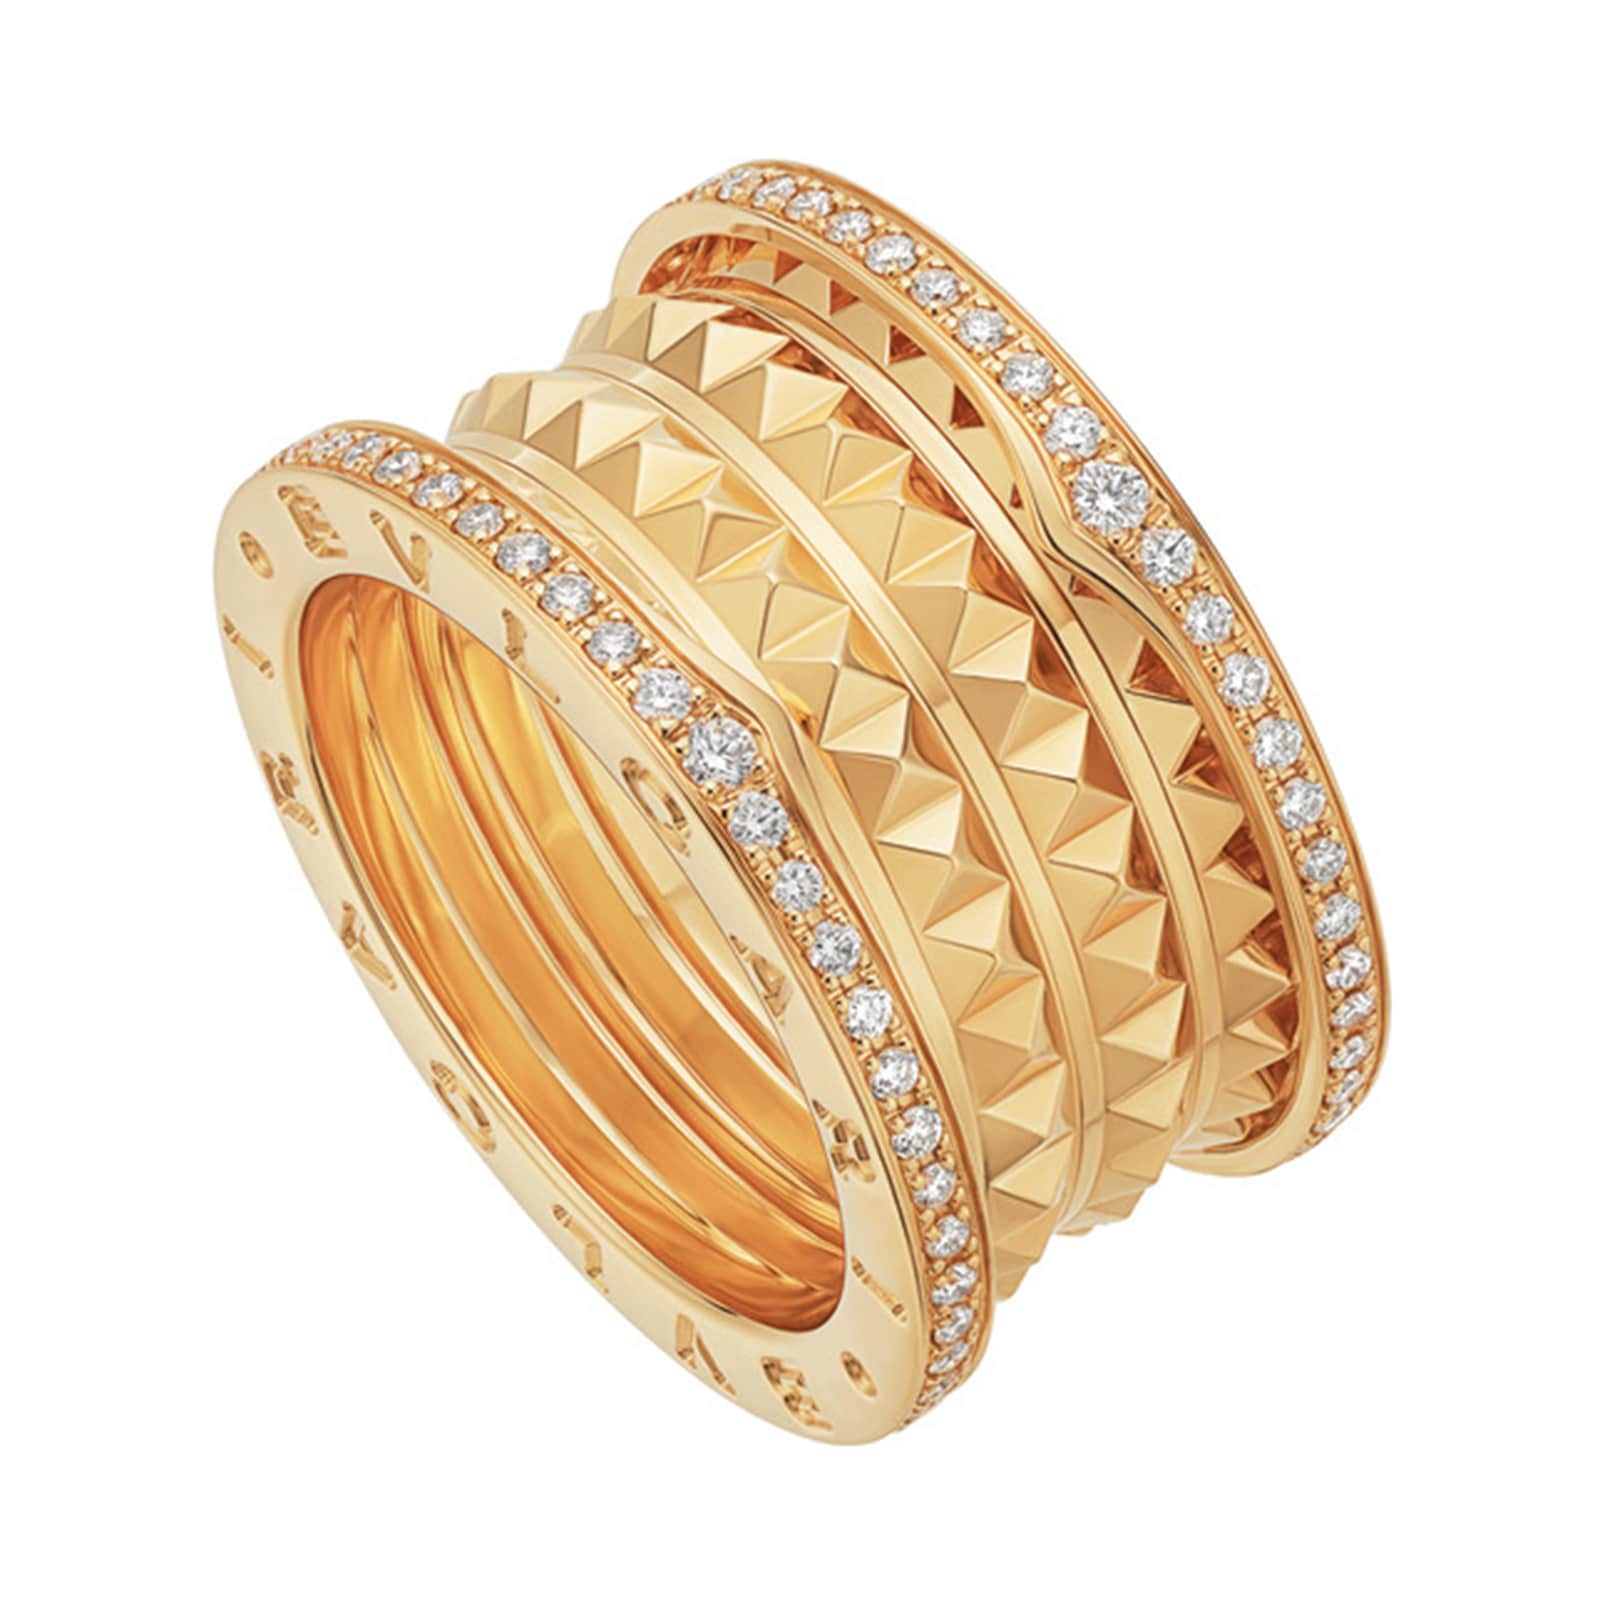 18k Yellow Gold B.ZERO1 0.53cttw Diamond Ring - Size 7